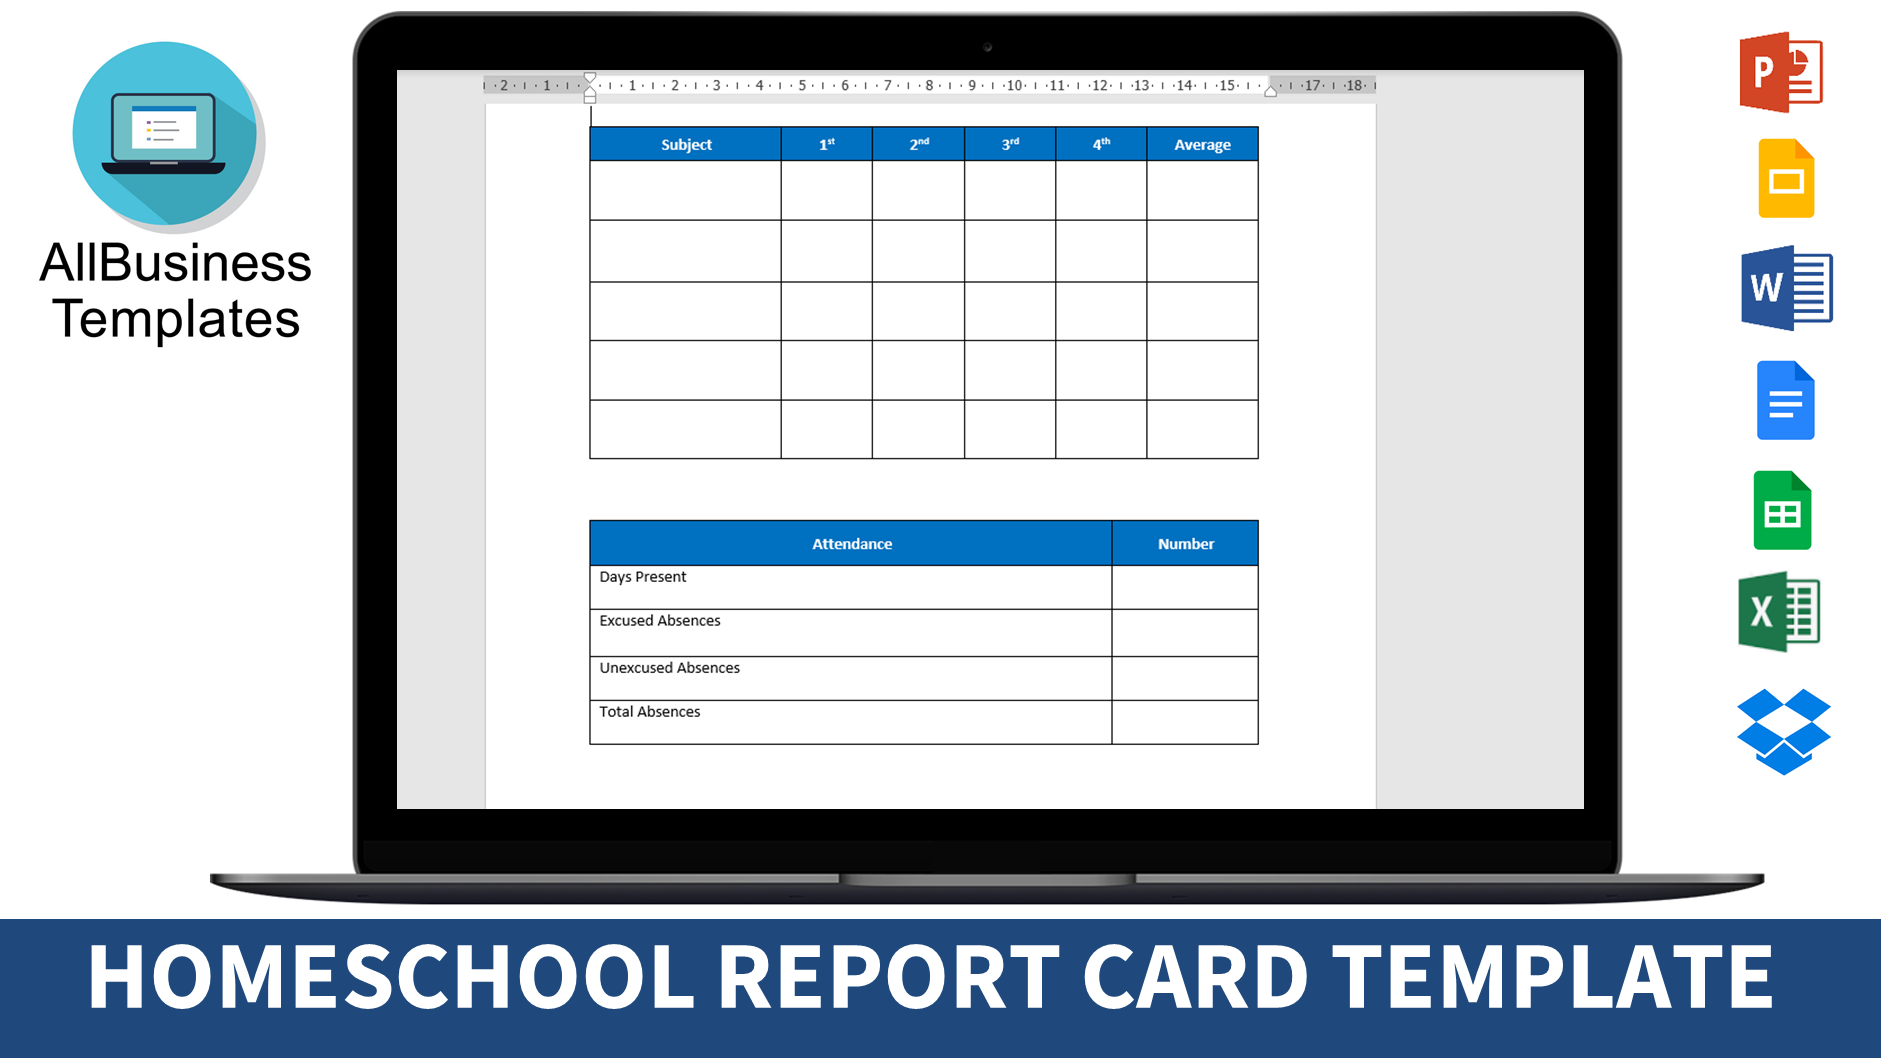 Homeschool Report Card Template main image